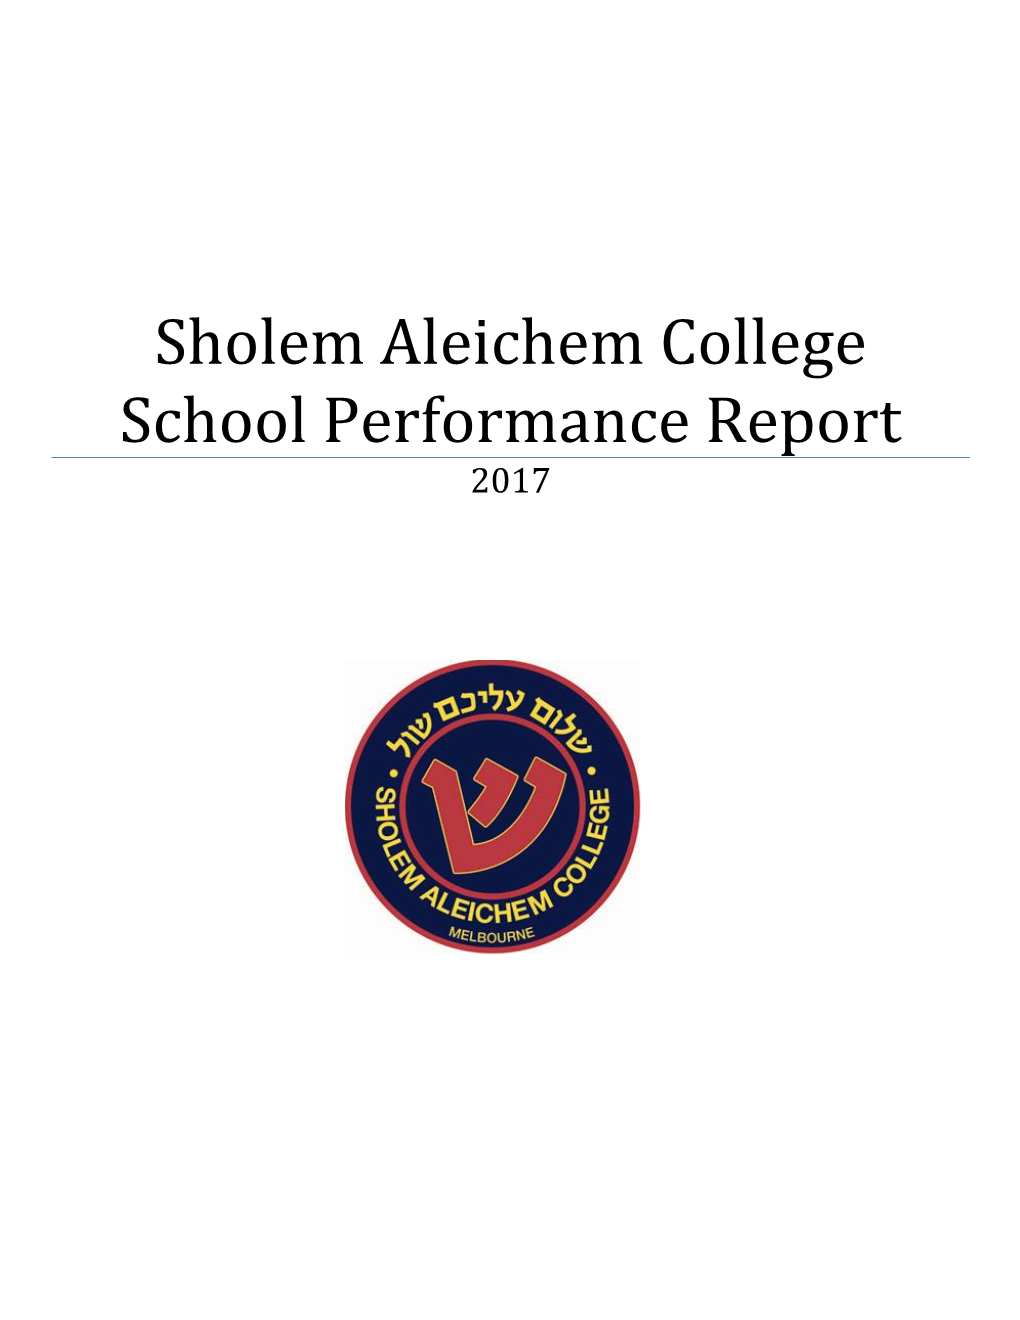 Sholem Aleichem College School Performance Report 2017